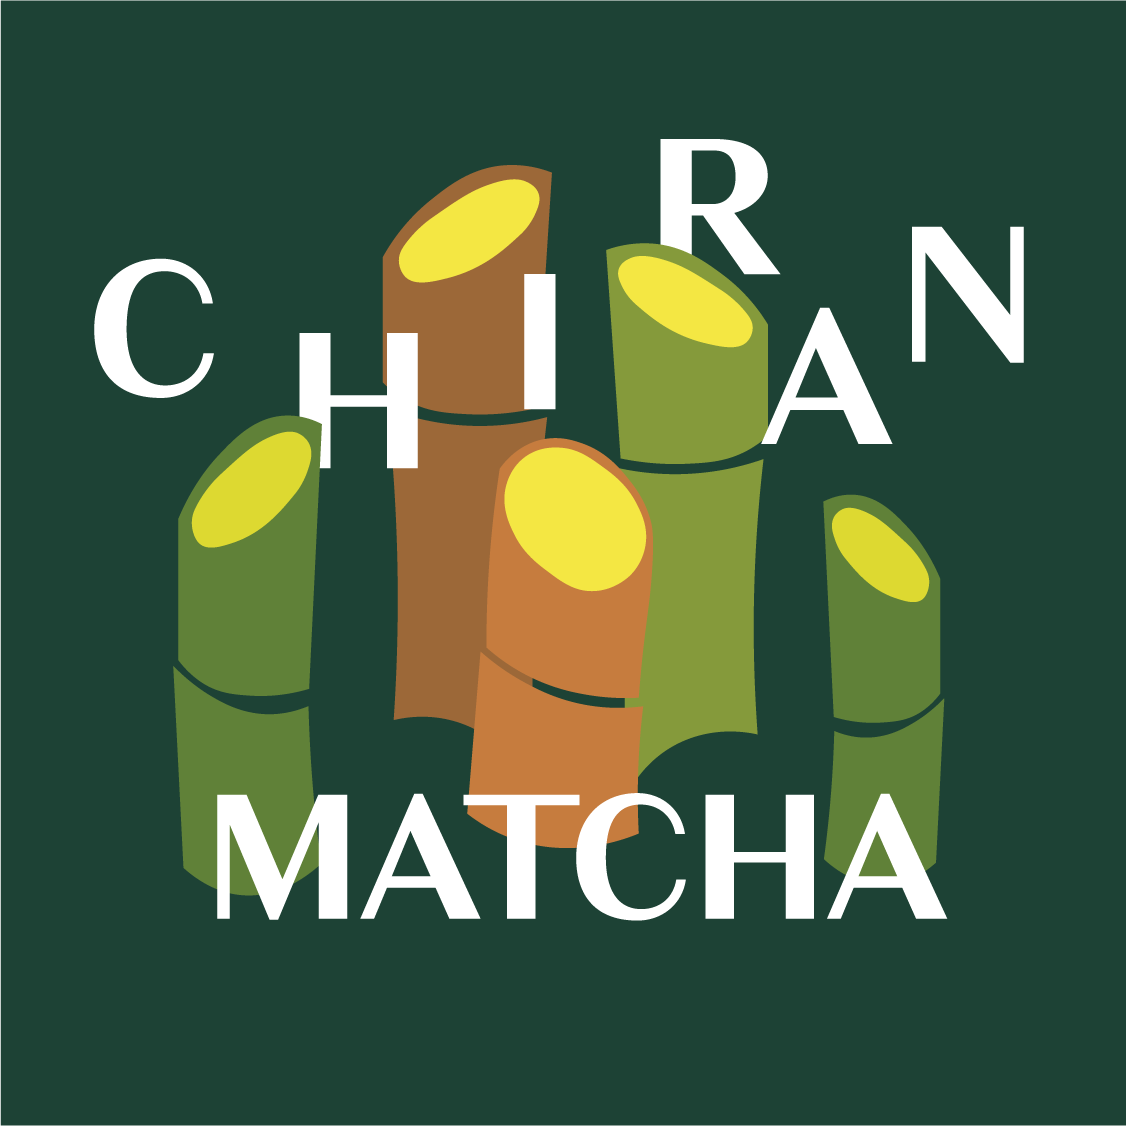 Chiran Matcha